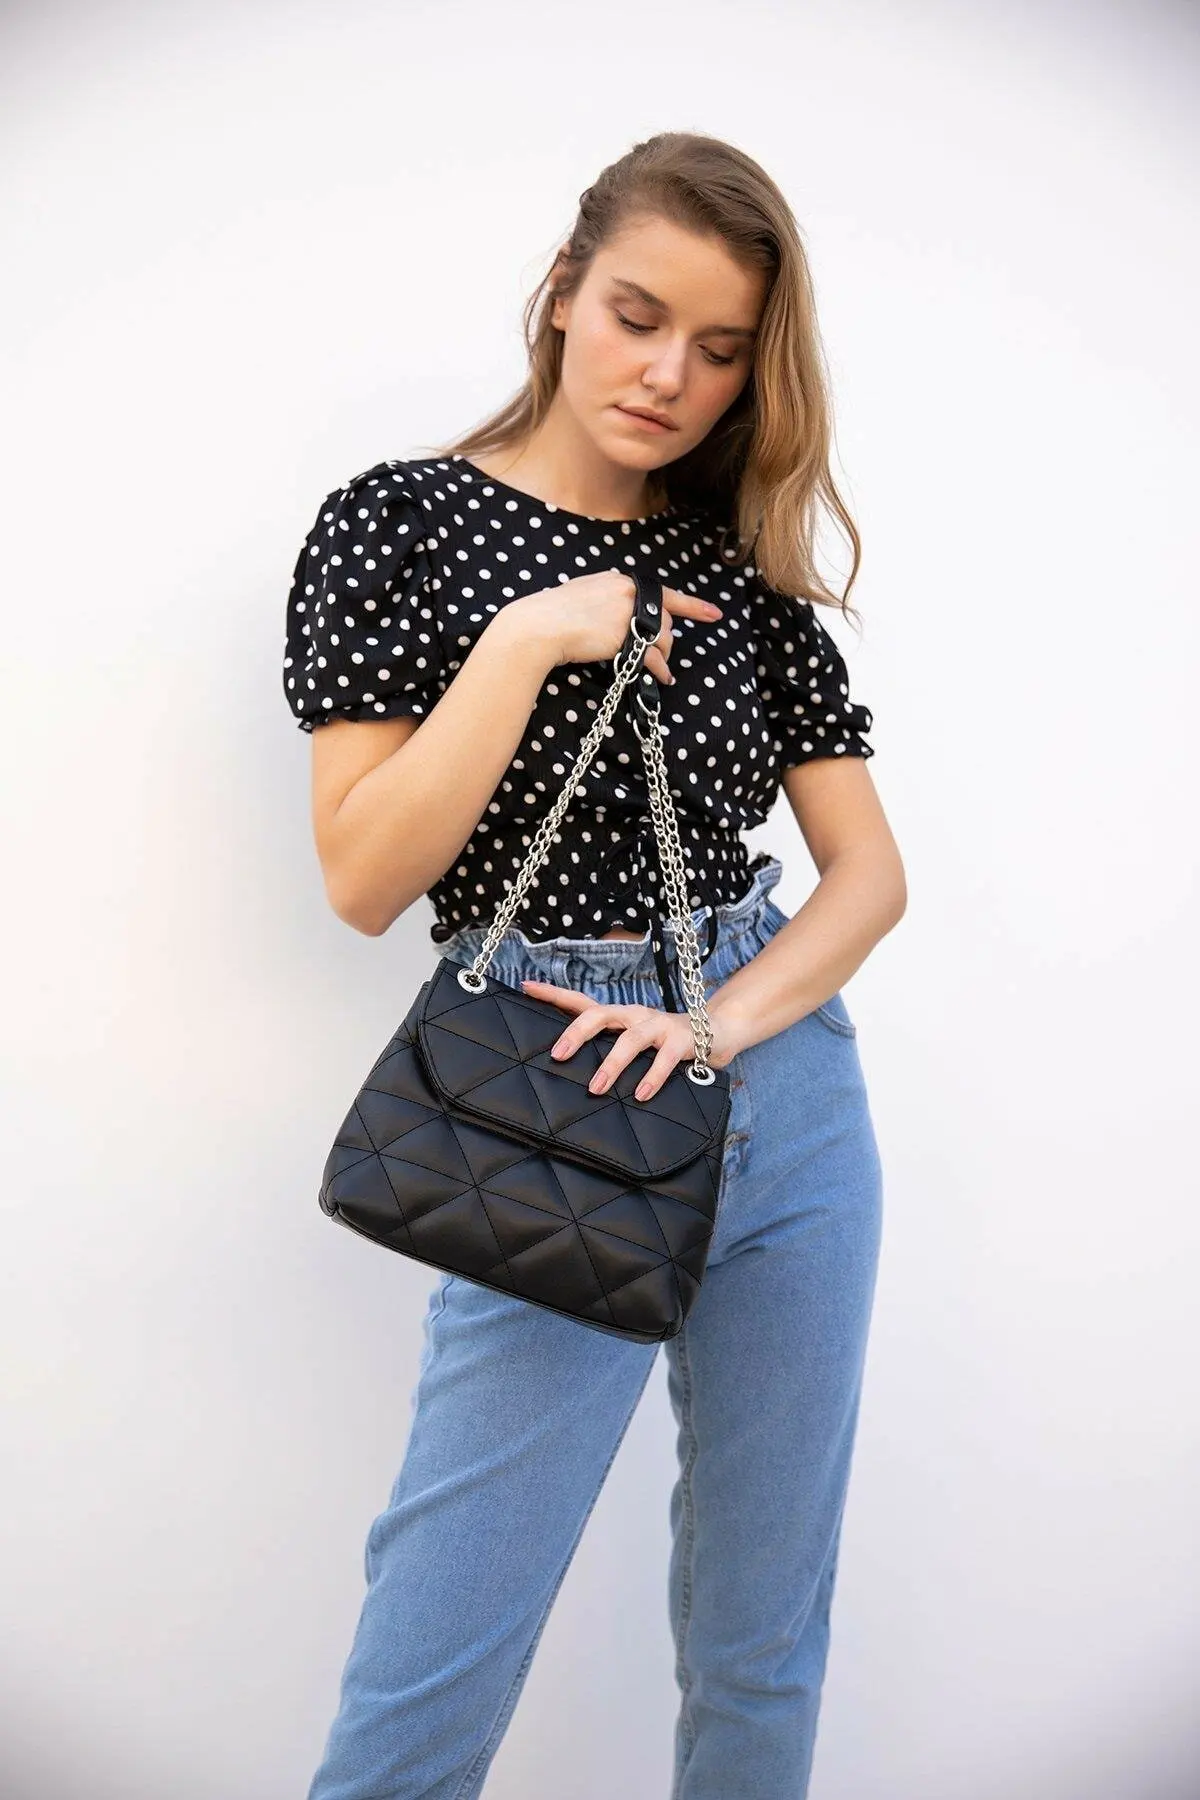 Shule Bags Quilted Print Crossbody Bag Pastel Black Women Retro Handbag 2021 Female Single Shoulder Bag Women's Trend Handbag